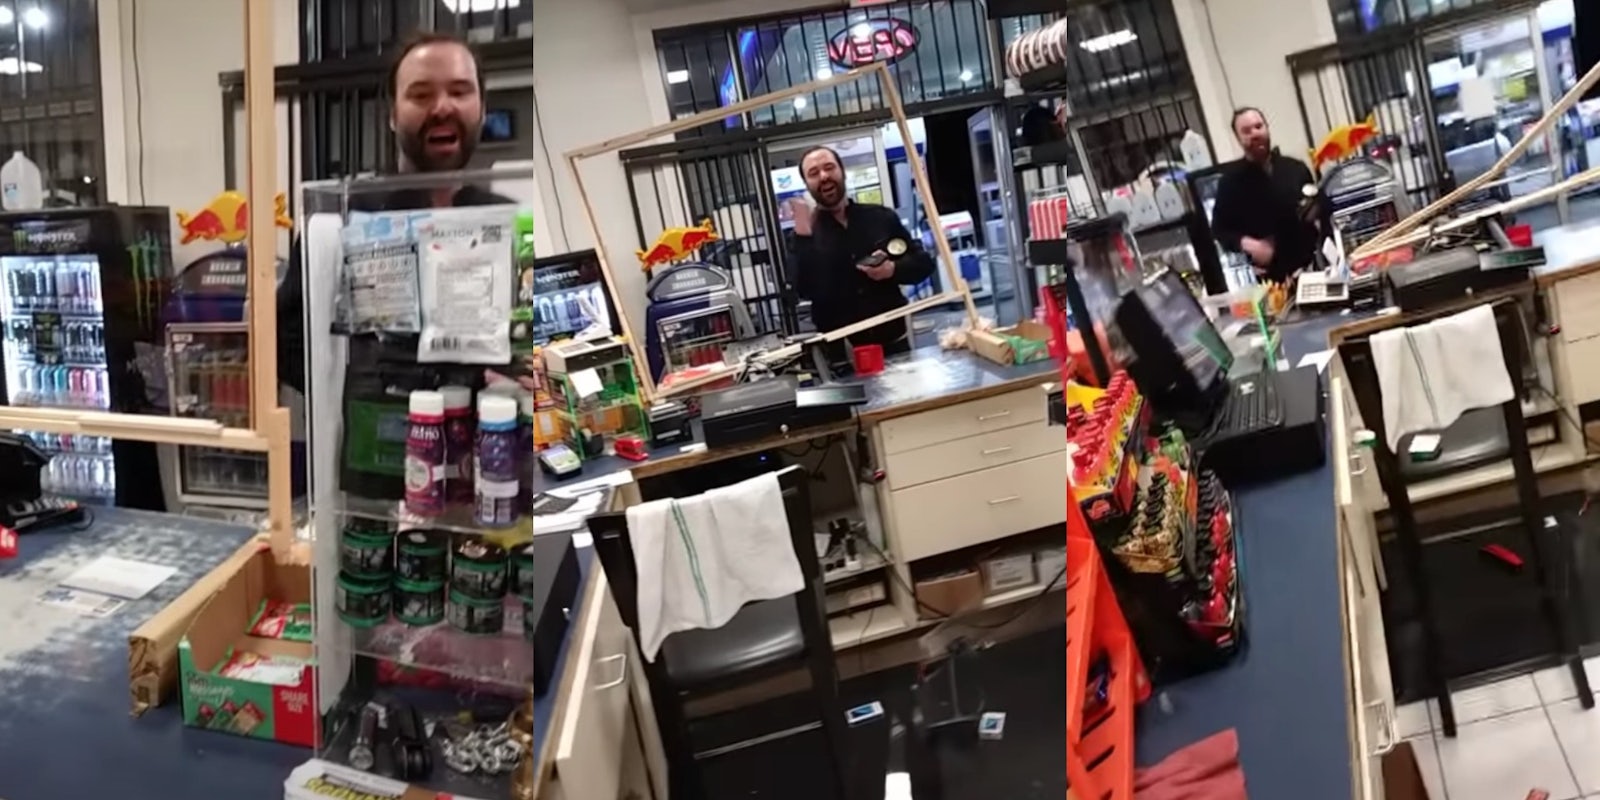 White man harasses gas station employee with anti-Muslim slurs